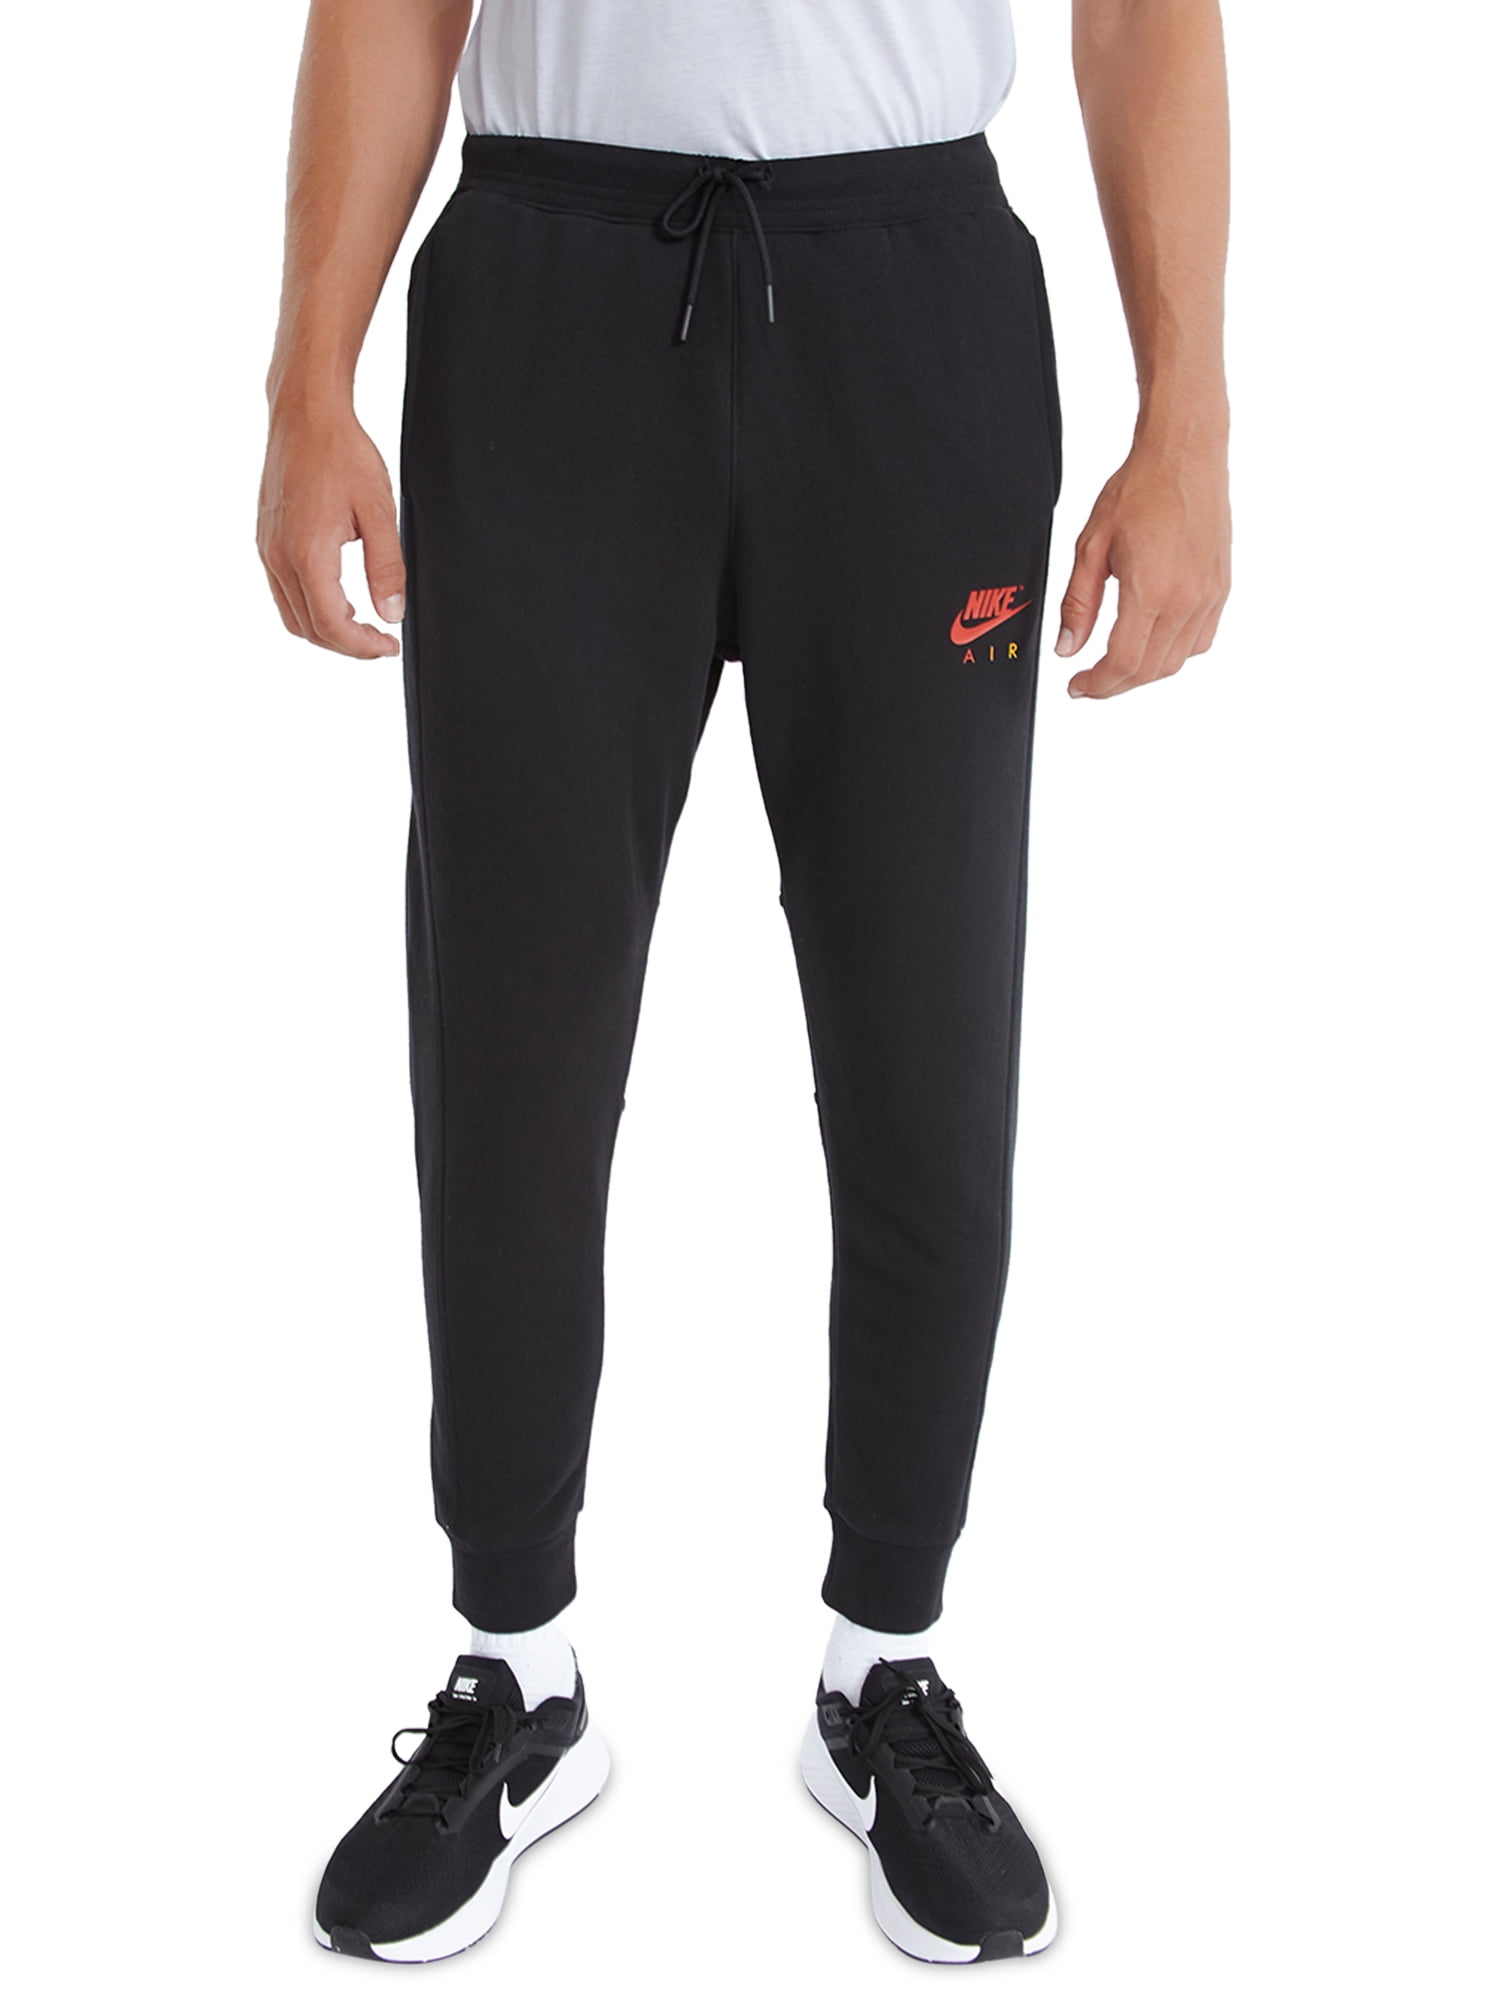 Nike Men's and Big Air Fleece Pants, up to sizes - Walmart.com